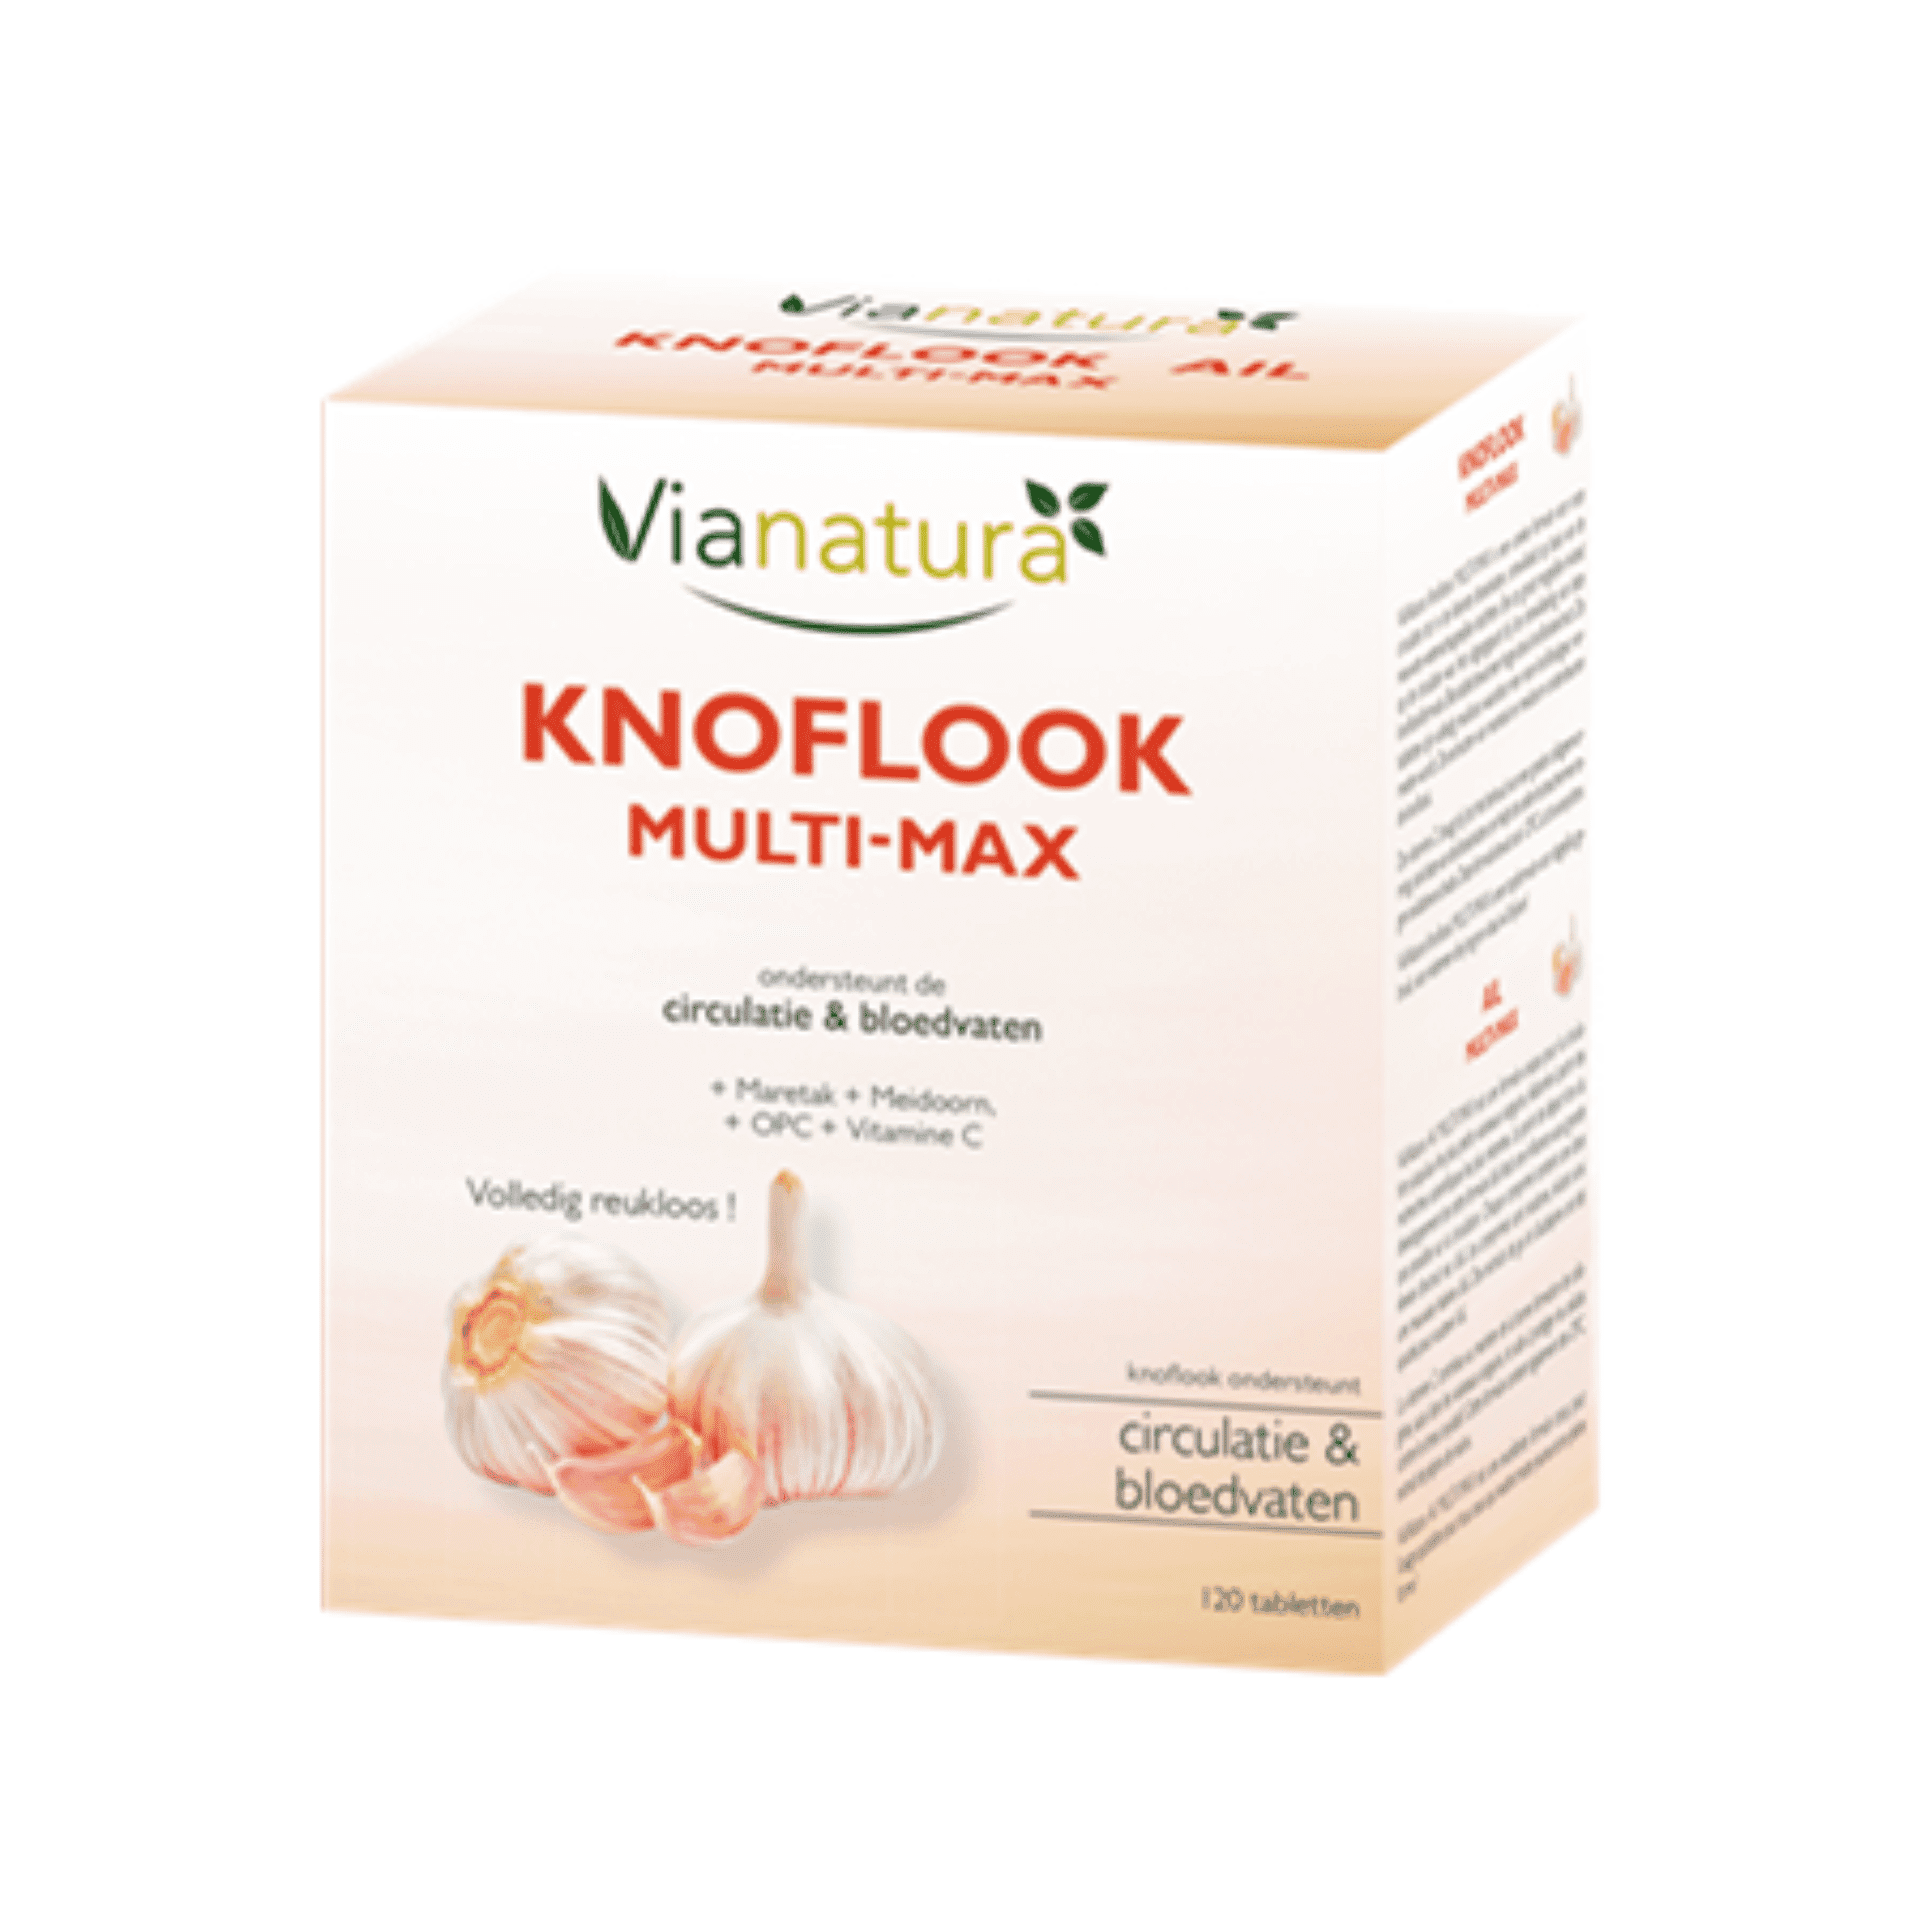 Vianatura Knoflook Multi-Max 120 tabletten